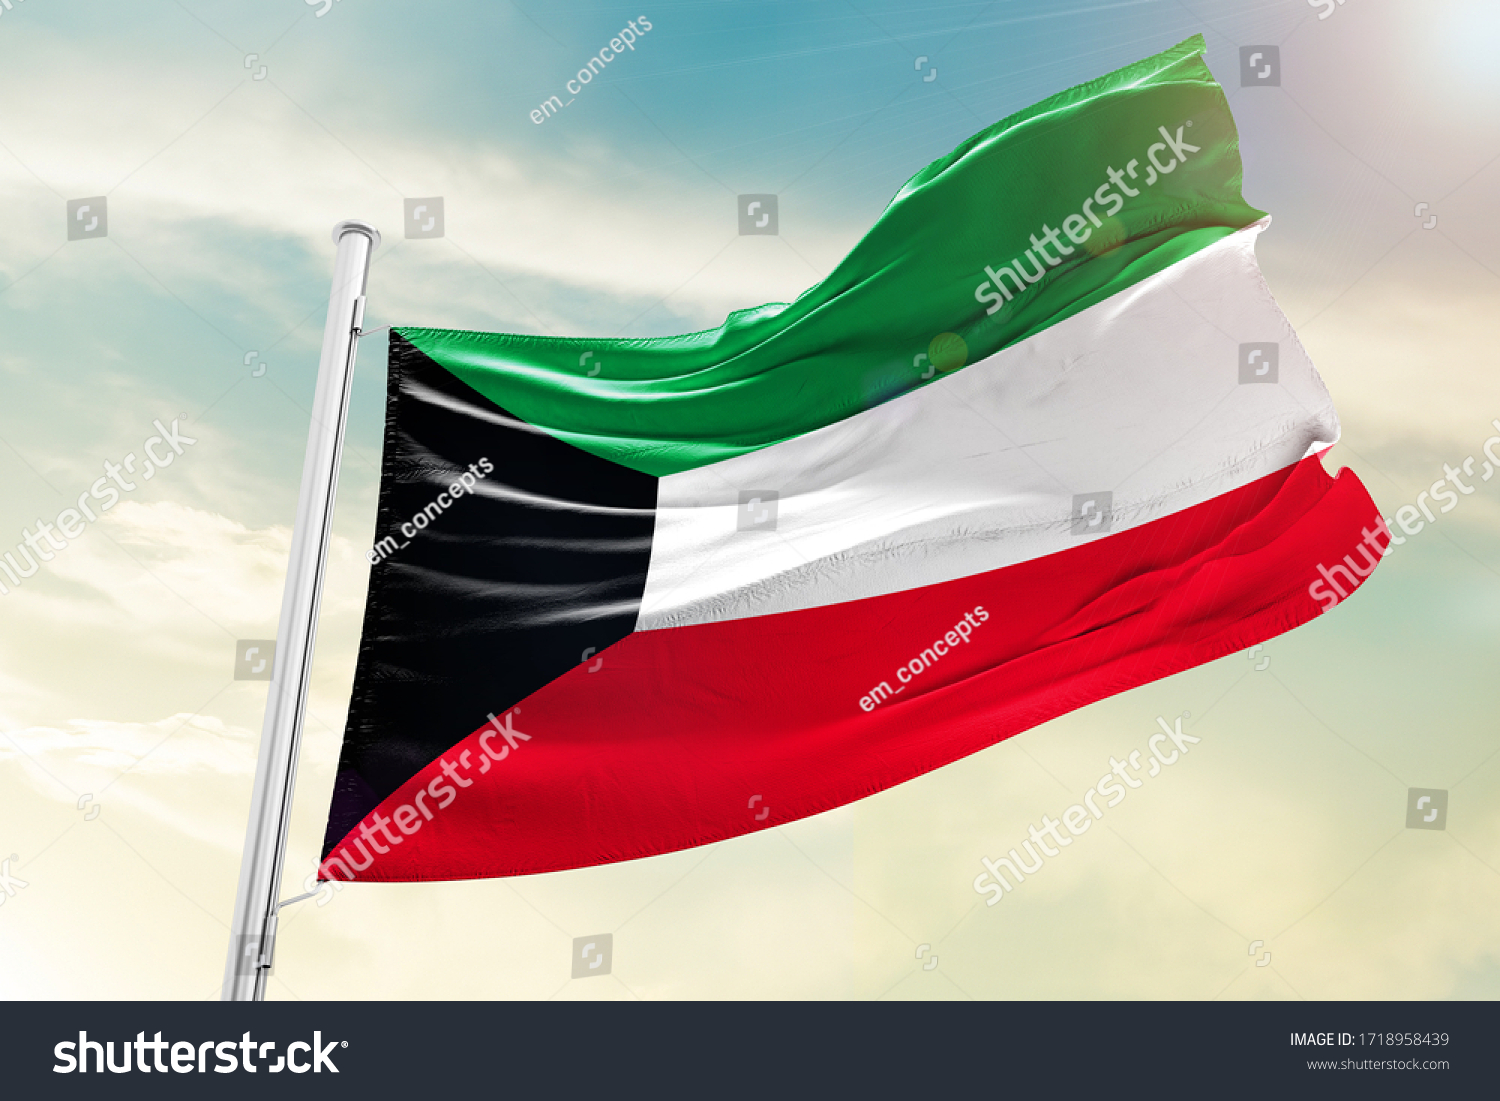 Kuwait national flag cloth fabric waving on the sky with beautiful sky - Image #1718958439